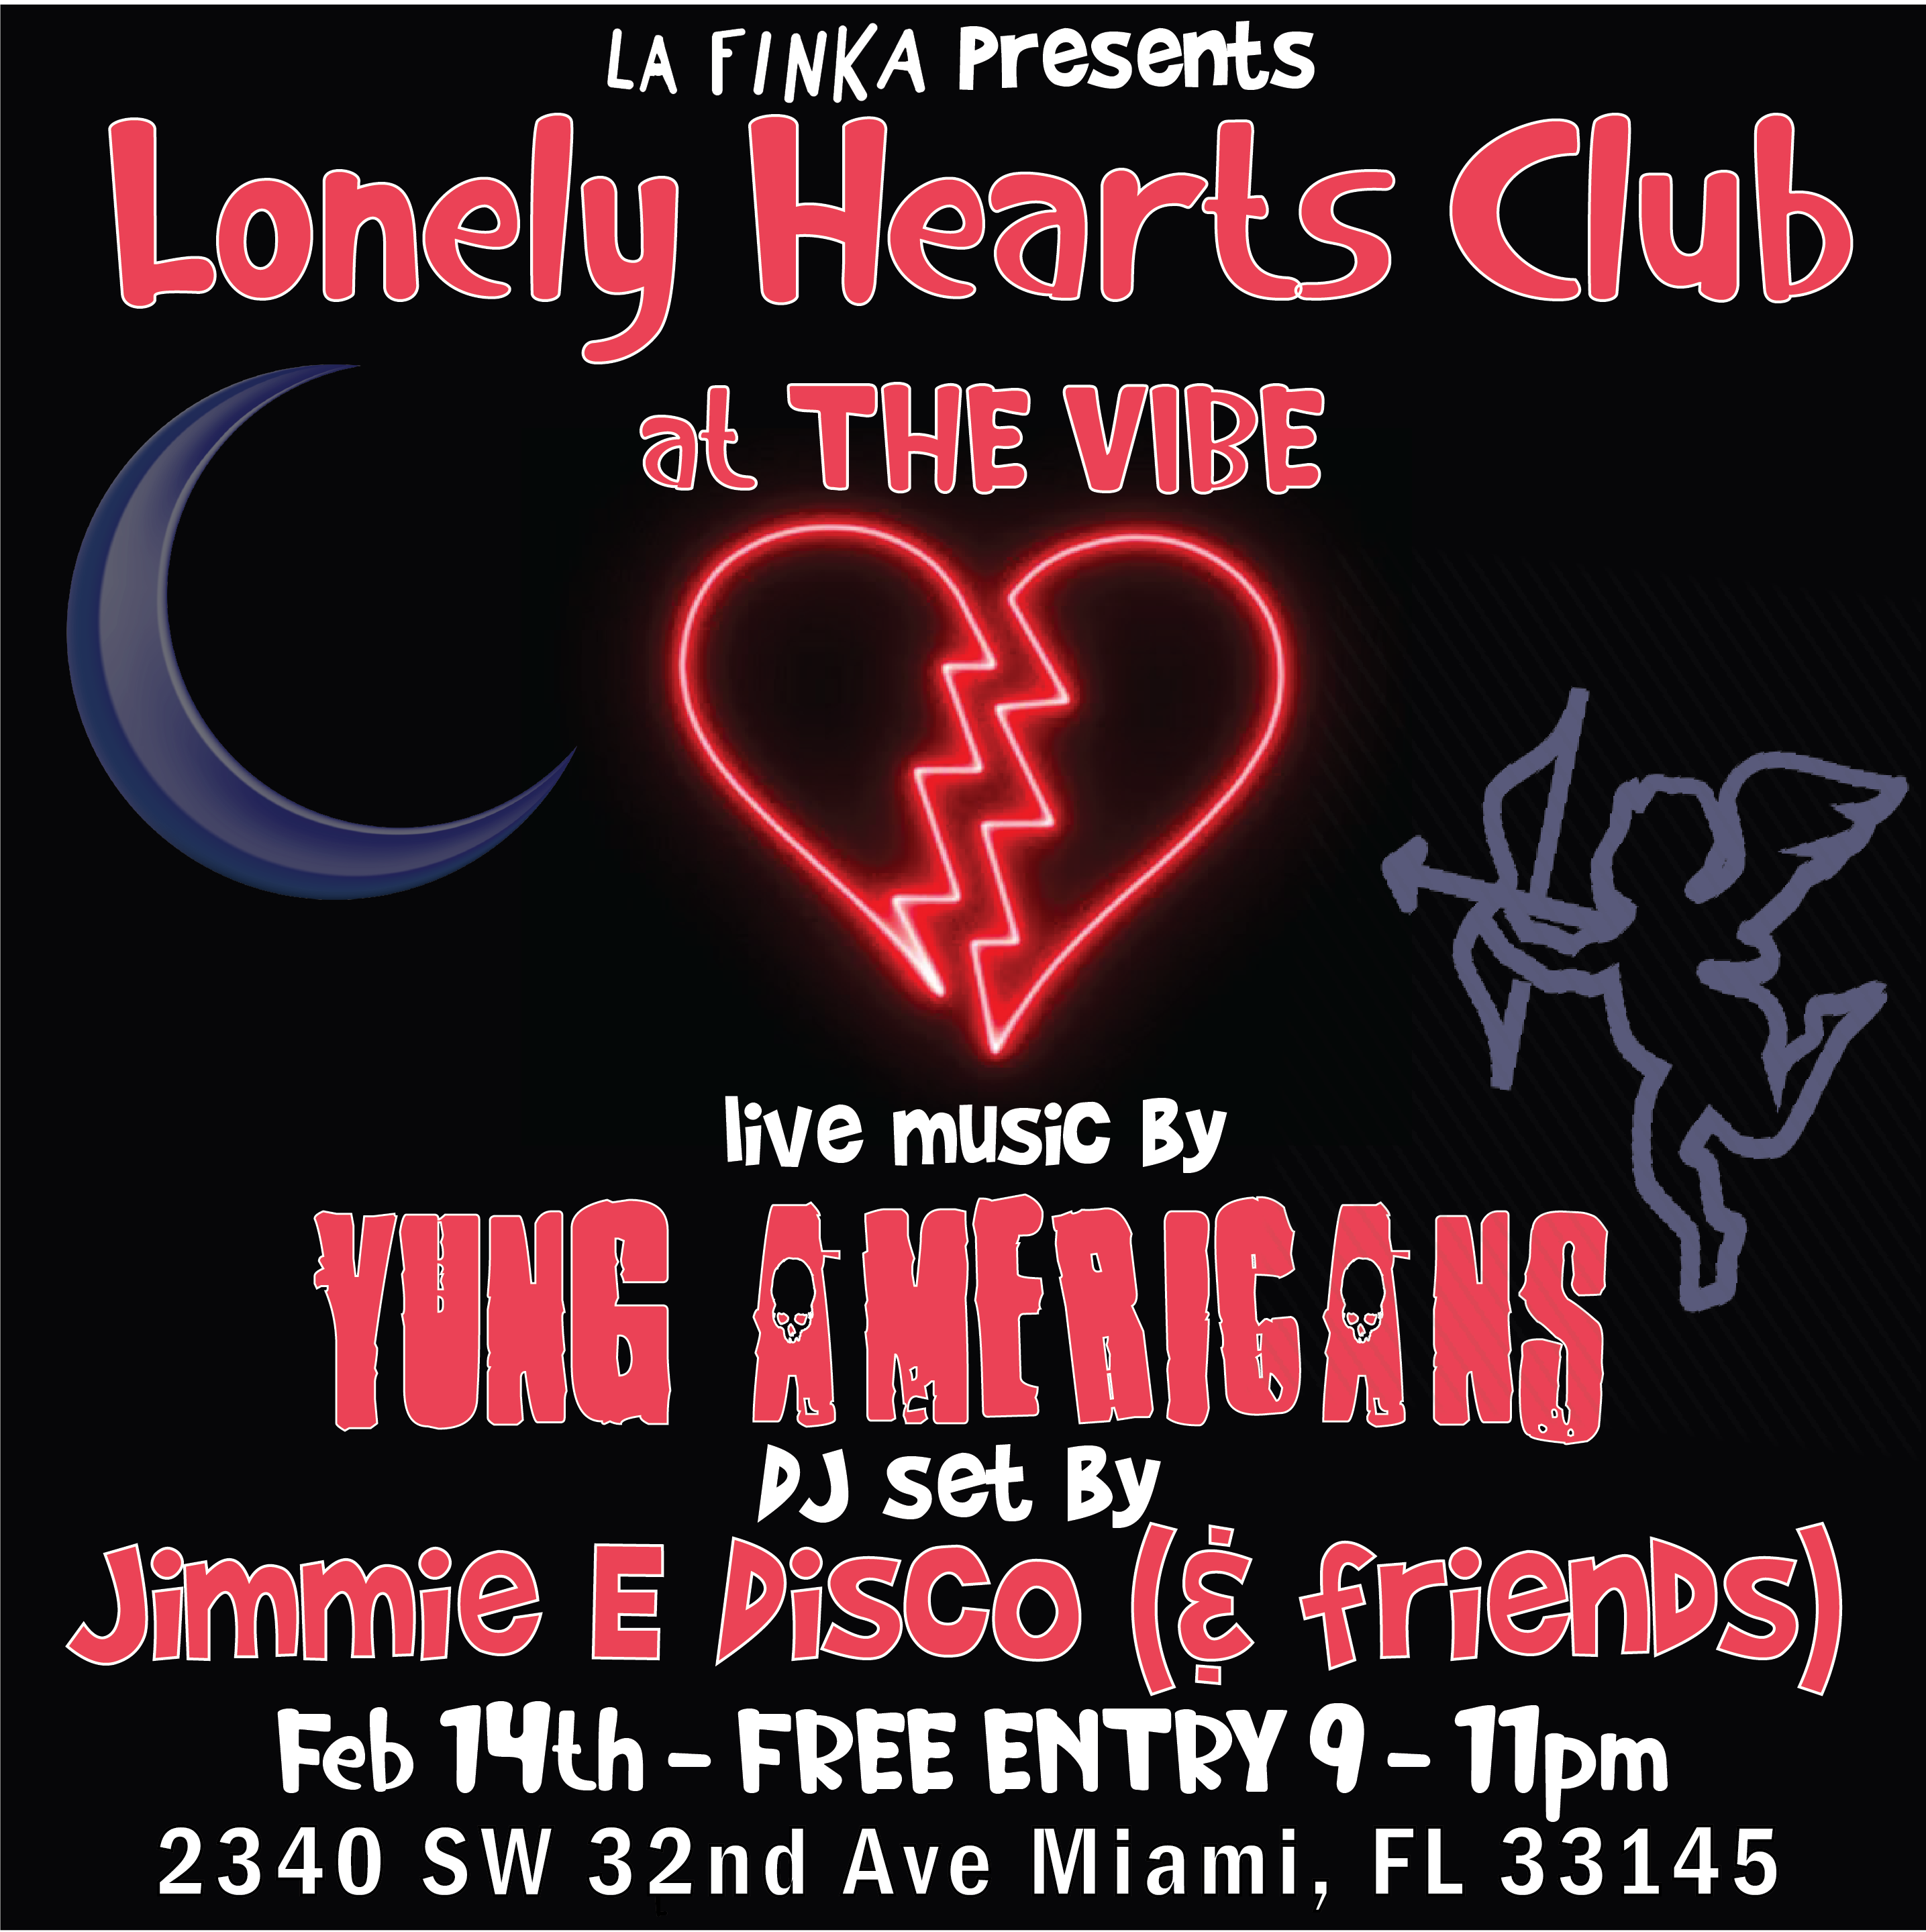 Lonley Hearts Club at The Vibe